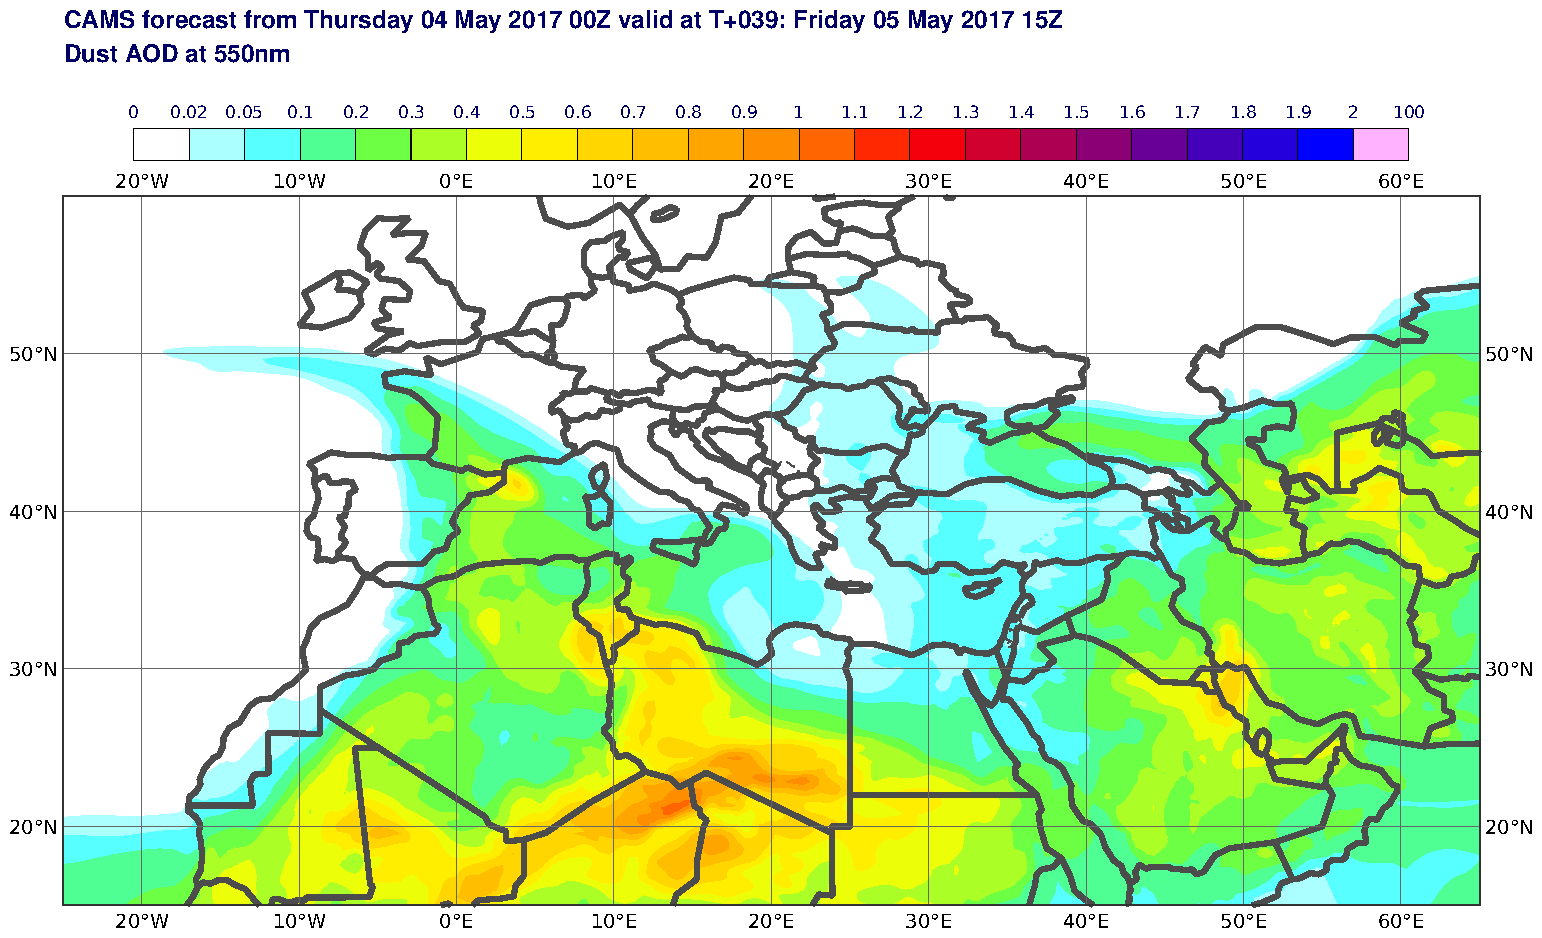 Dust AOD at 550nm valid at T39 - 2017-05-05 15:00